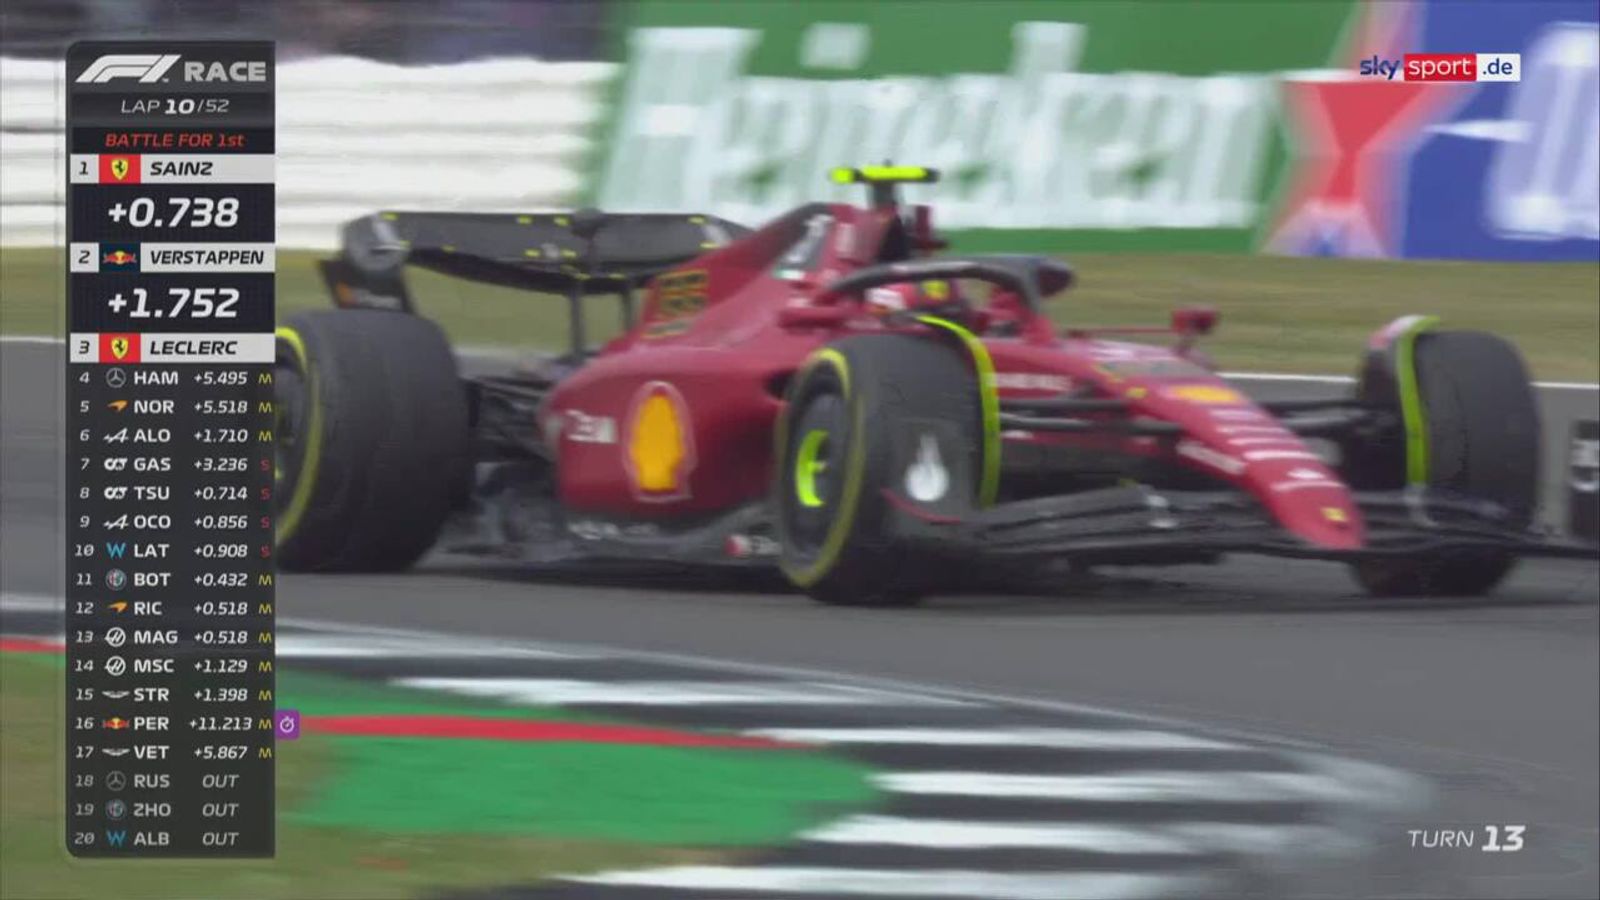 Formel 1 Video Die kompakten Highlights vom Grand Prix in Silverstone Formel 1 News Sky Sport